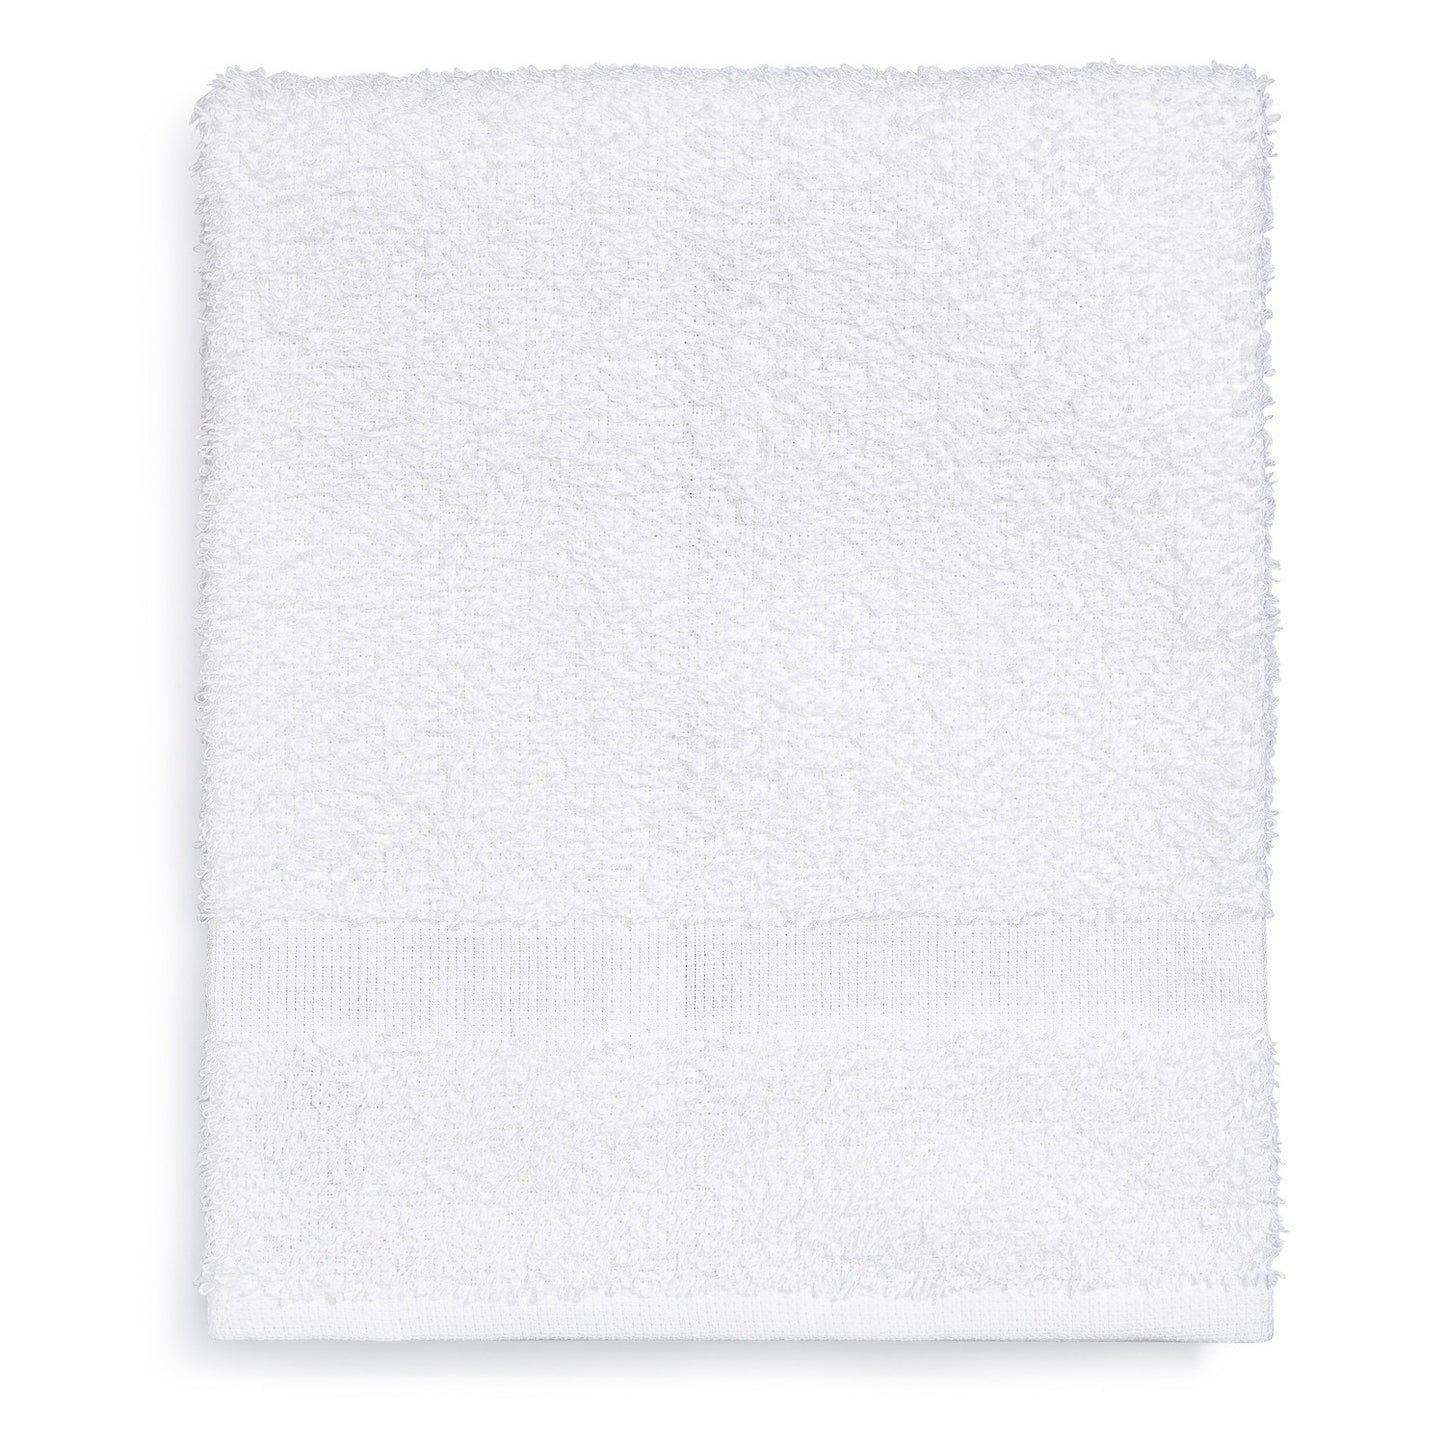 Premium Hand Towel, 16"x27"-3 LBS, 15 DZ/cs